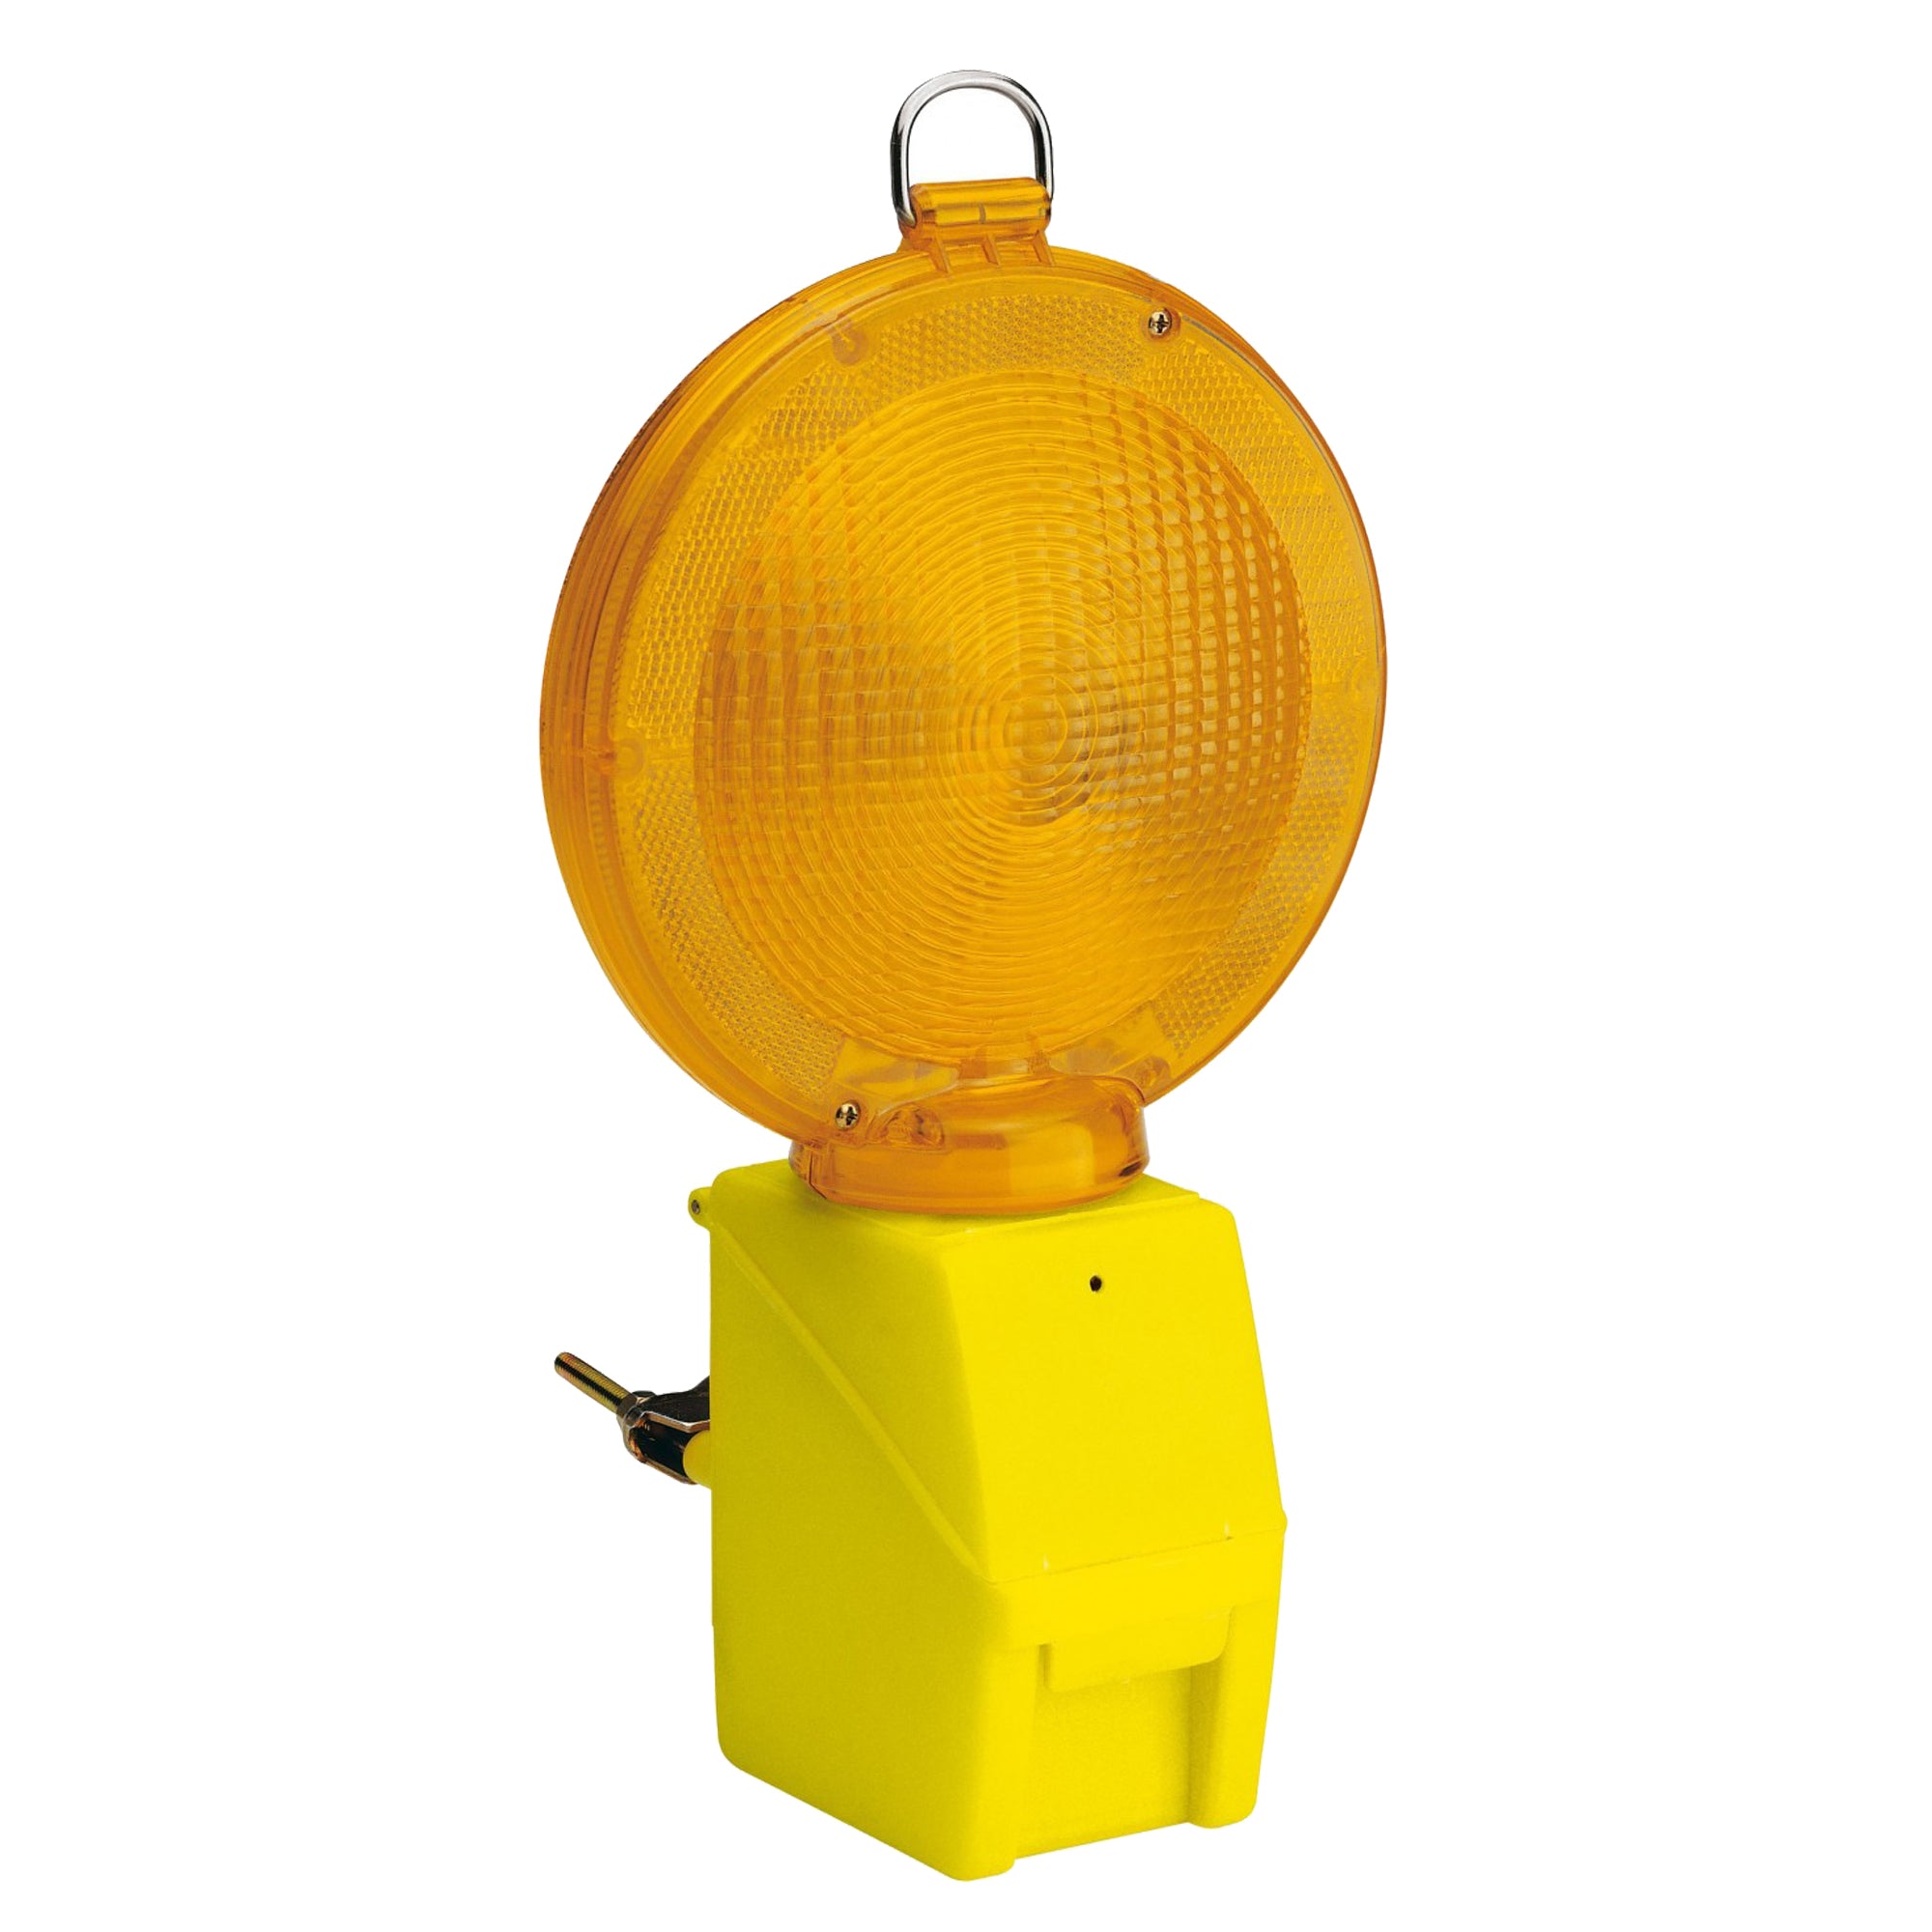 velamp-lampeggiante-stradale-blink-road-giallo-fluo-arancio